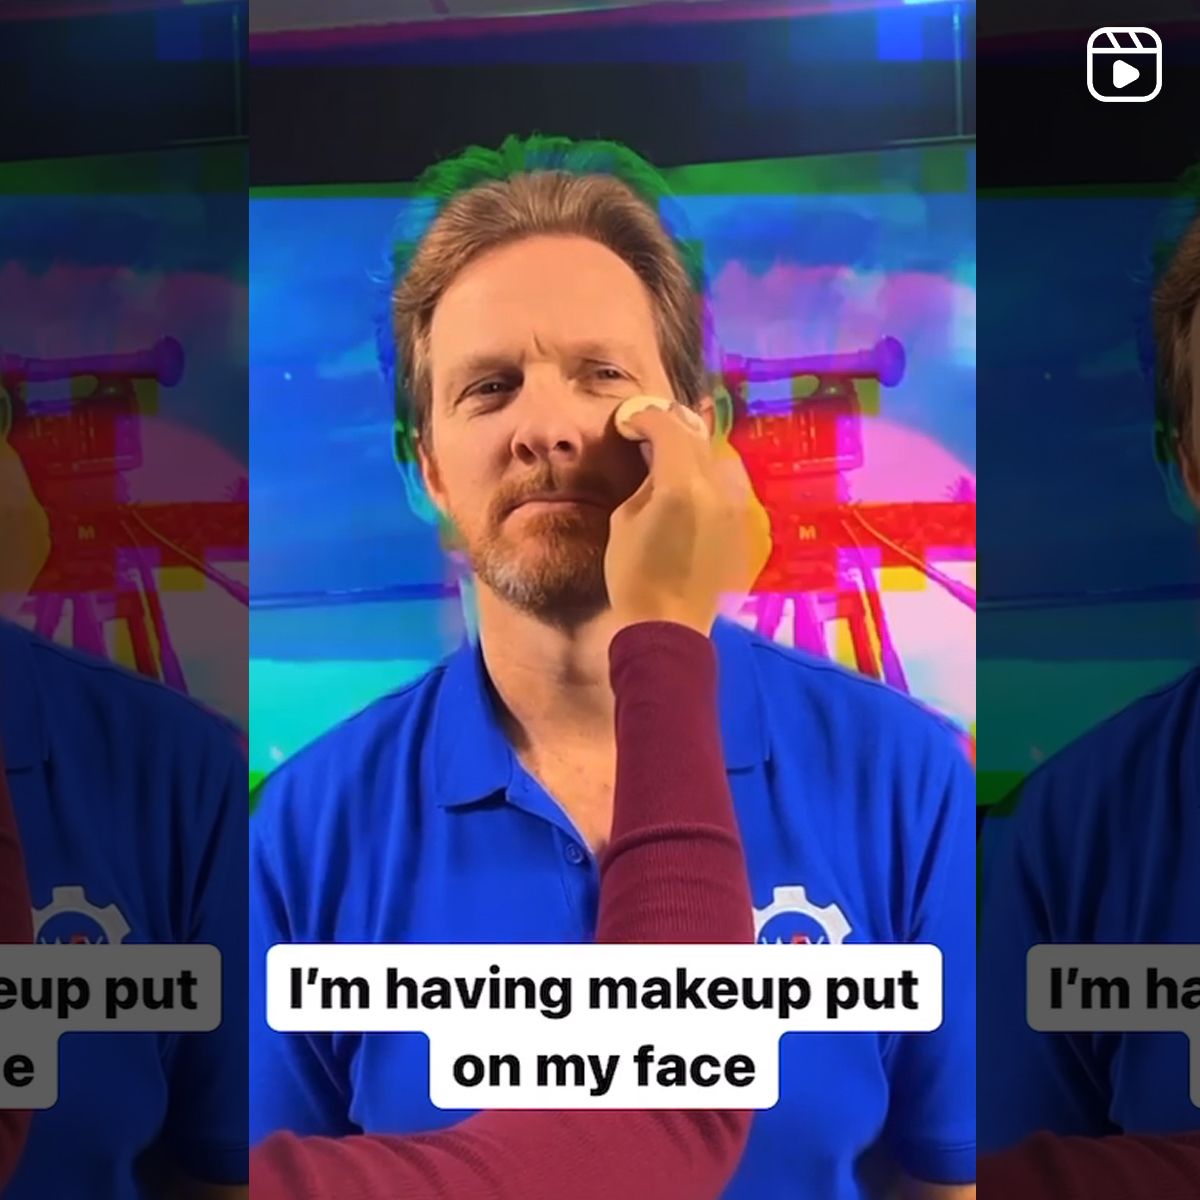 I'm having makeup put on my face